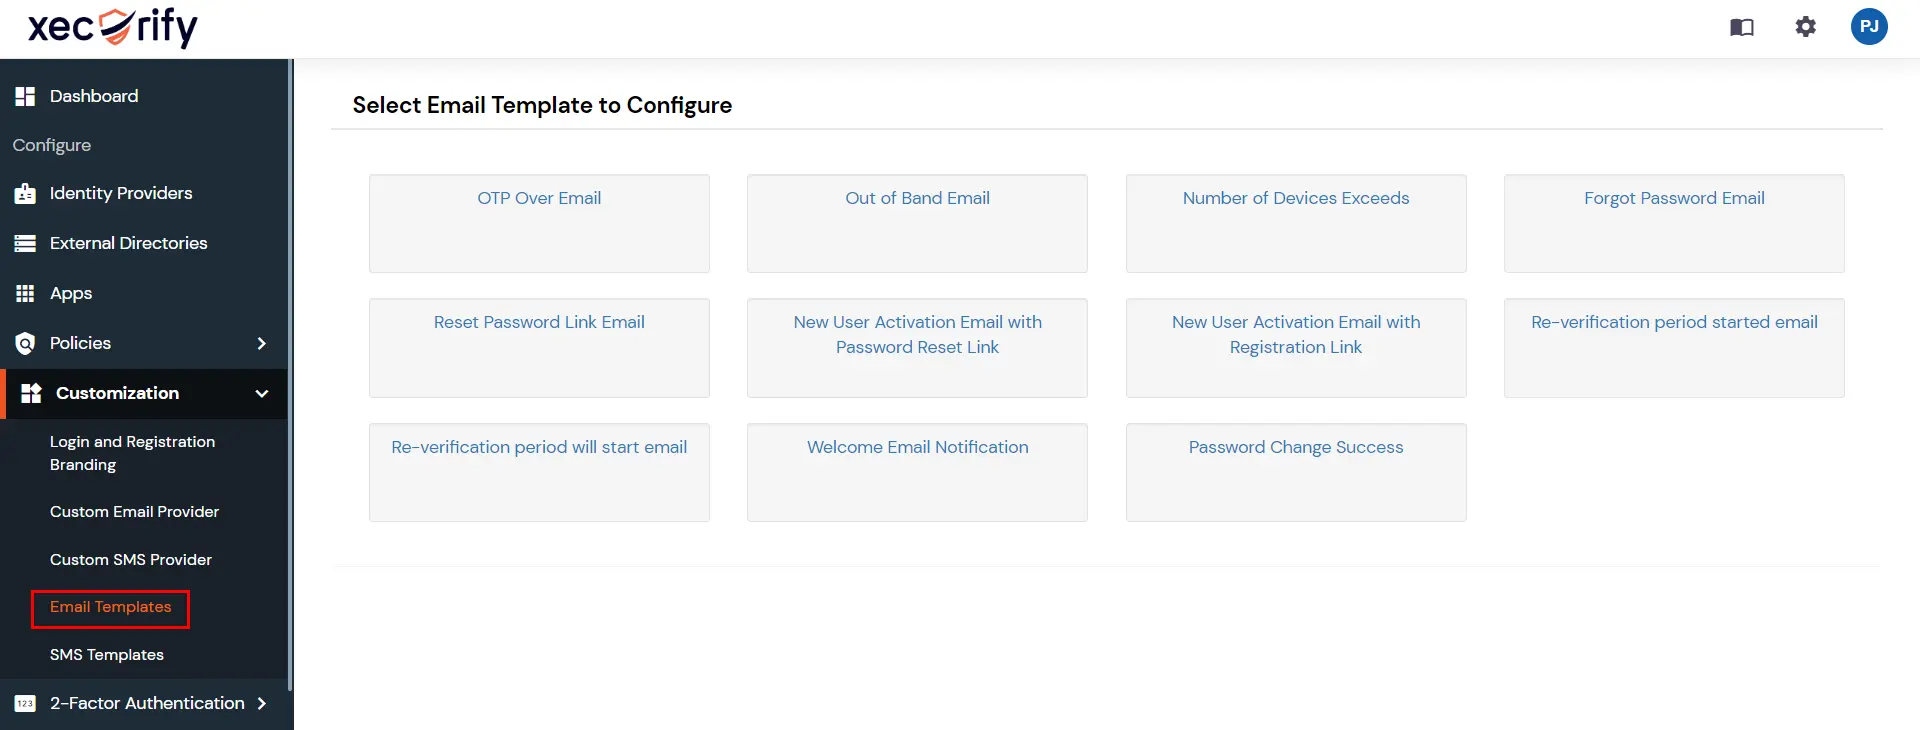 miniOrange Identity Platform Admin Handbook: select email template